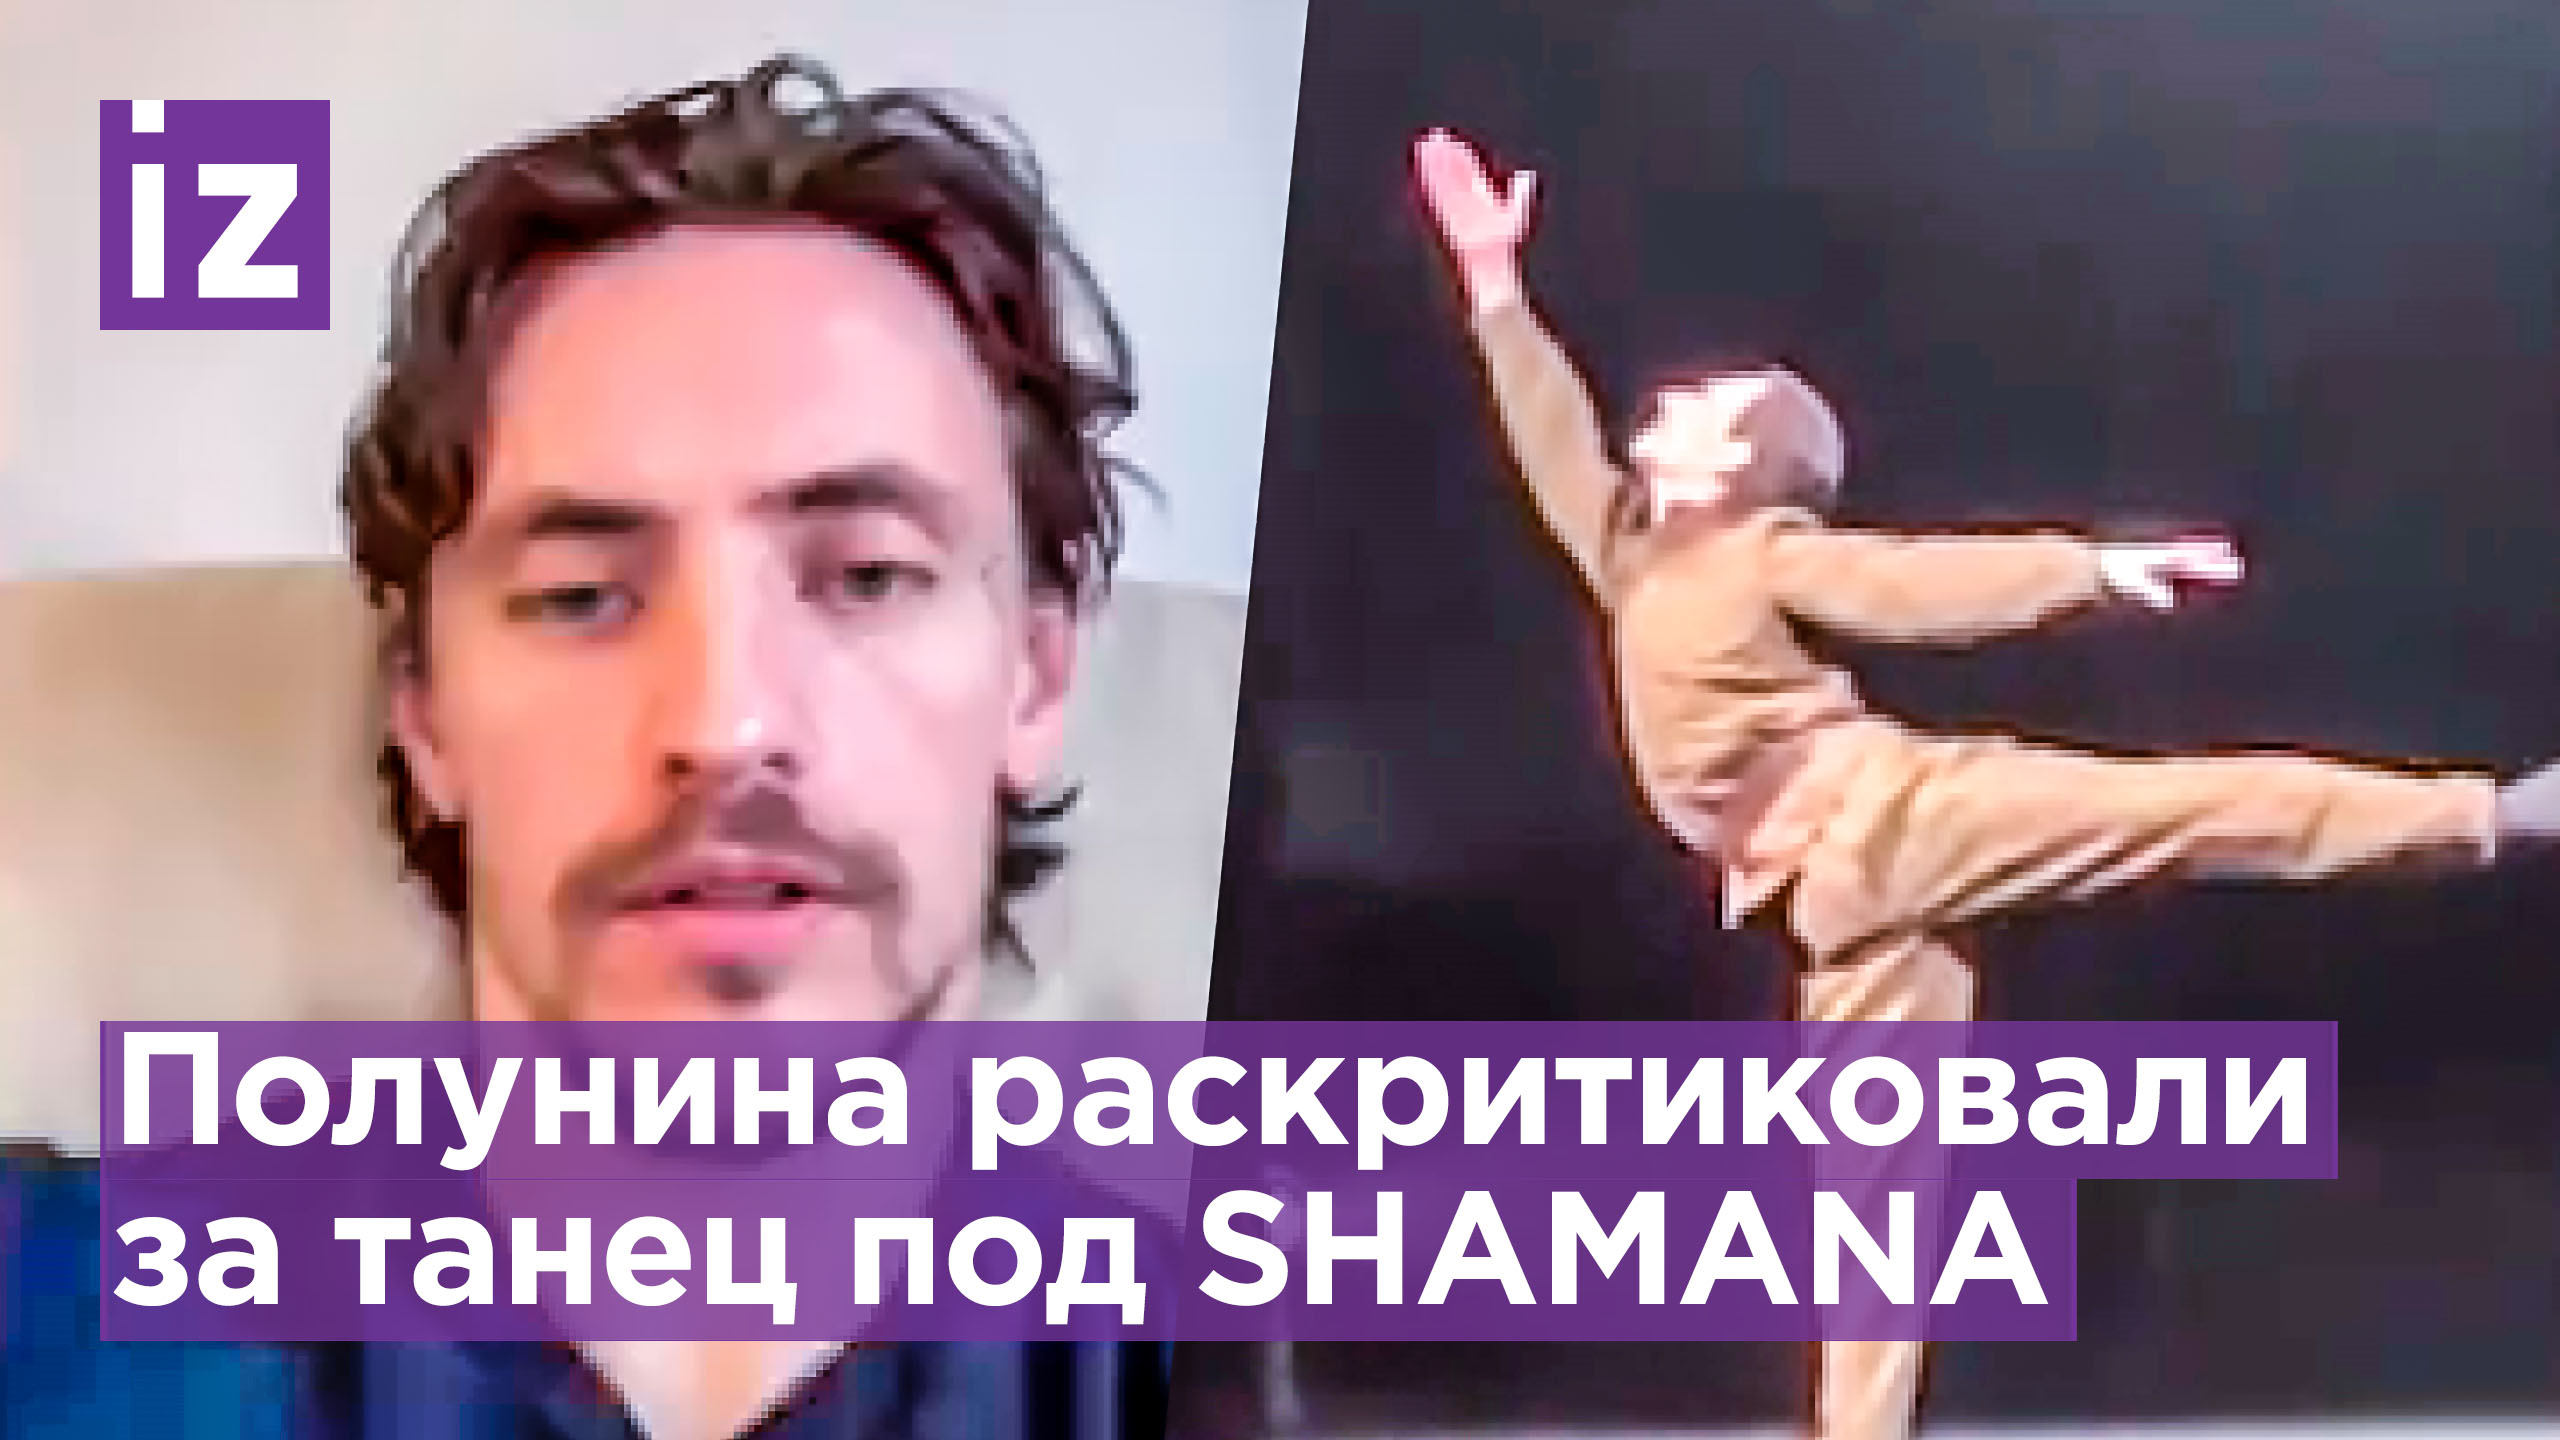 Звезду балета Сергея Полунина оскорбили в Узбекистане за танец под песню "Встанем" артиста SHAMAN